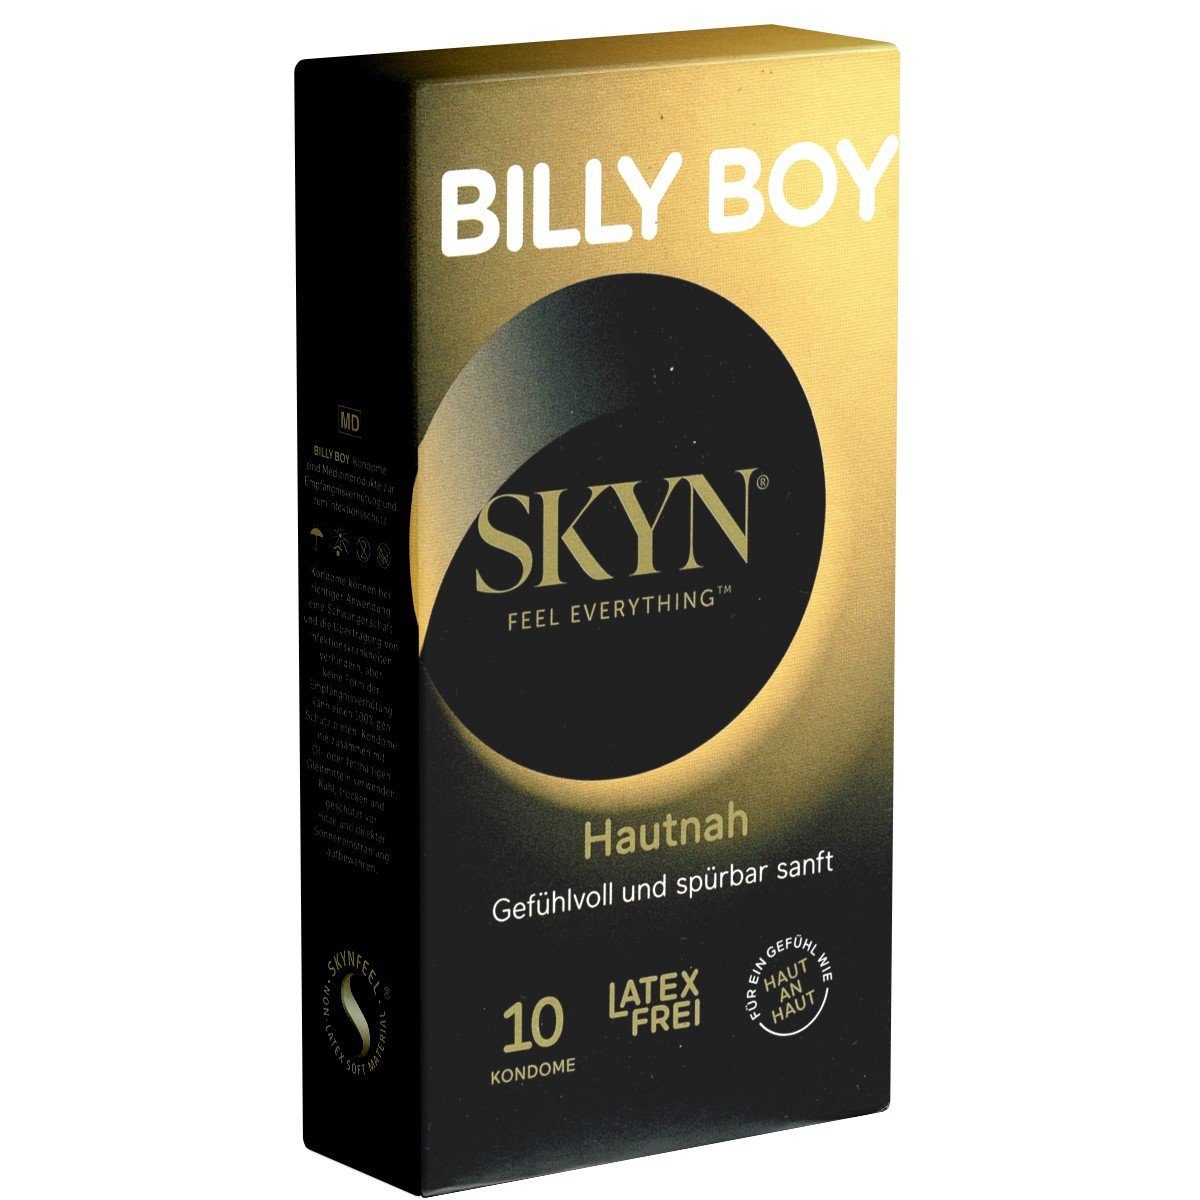 Billy Boy Kondome SKYN Hautnah aus St., mit, 10 Polyisopren Kondome latexfreie Packung